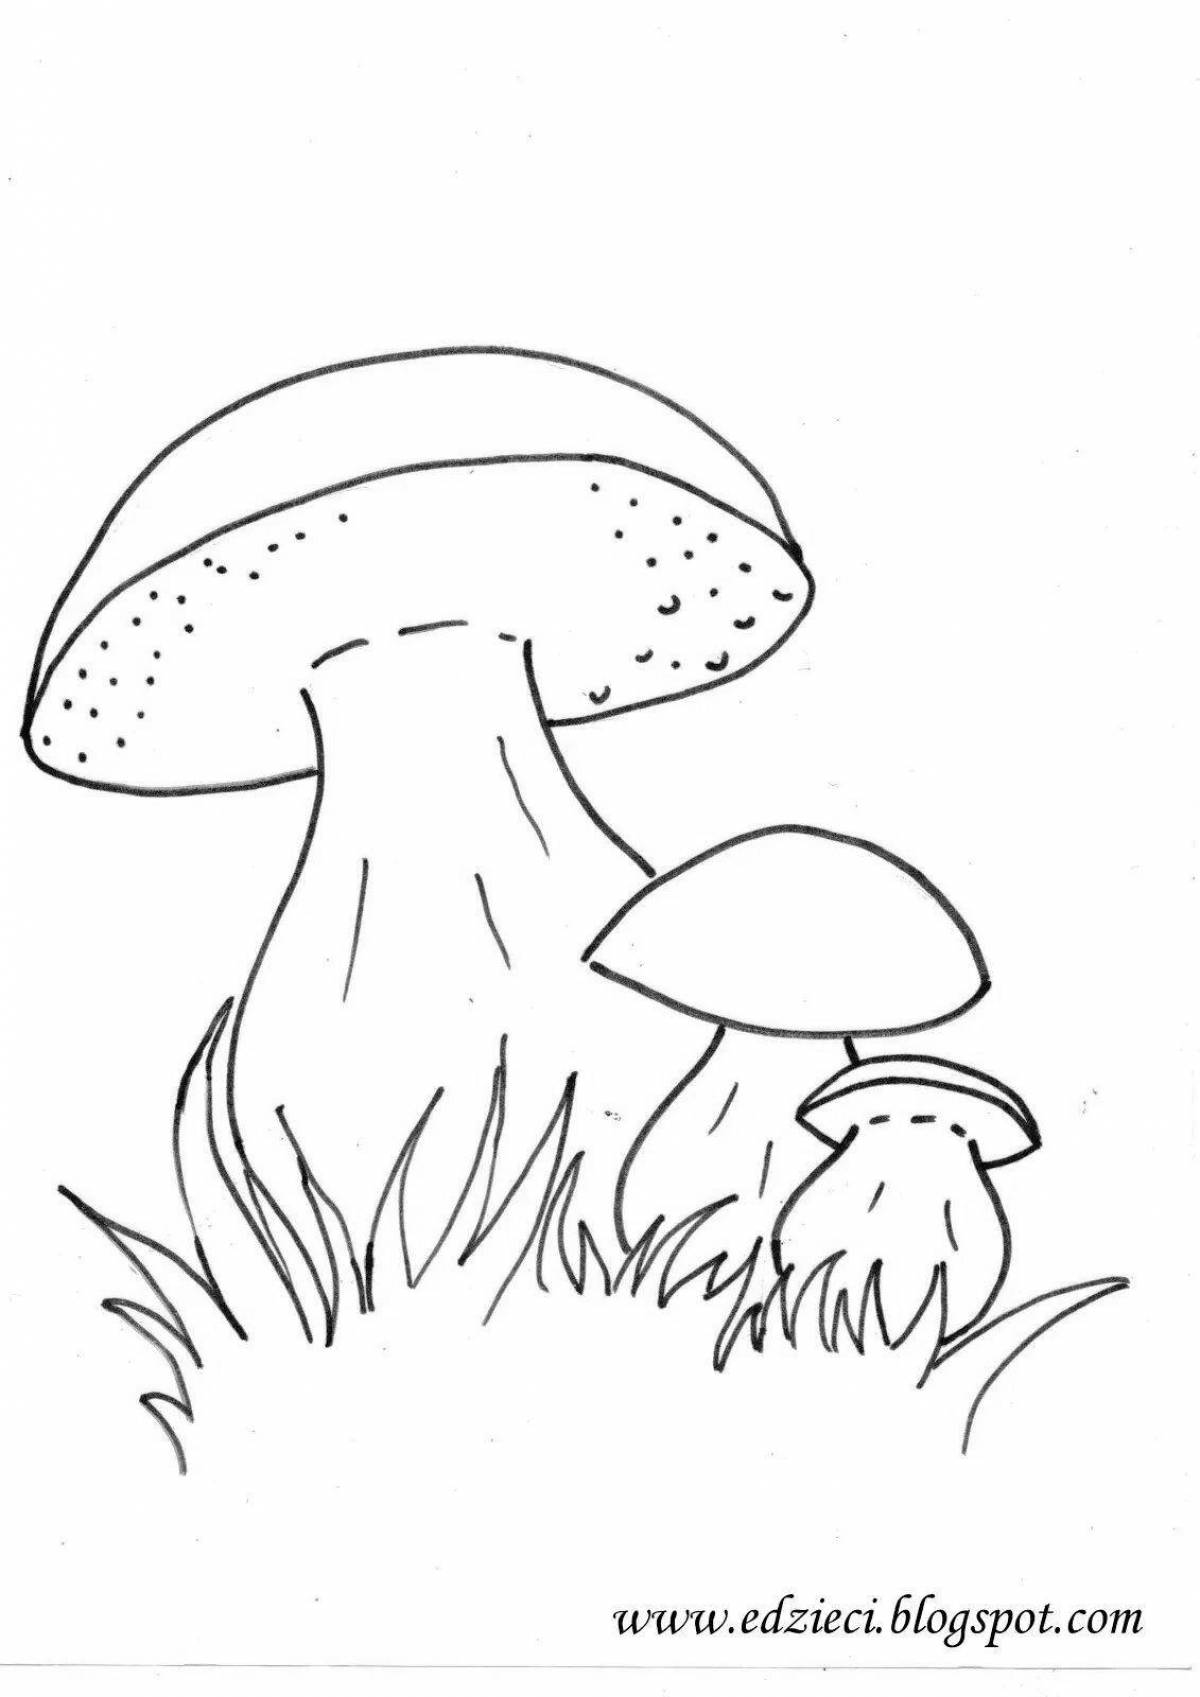 Spooky satanic mushroom coloring book